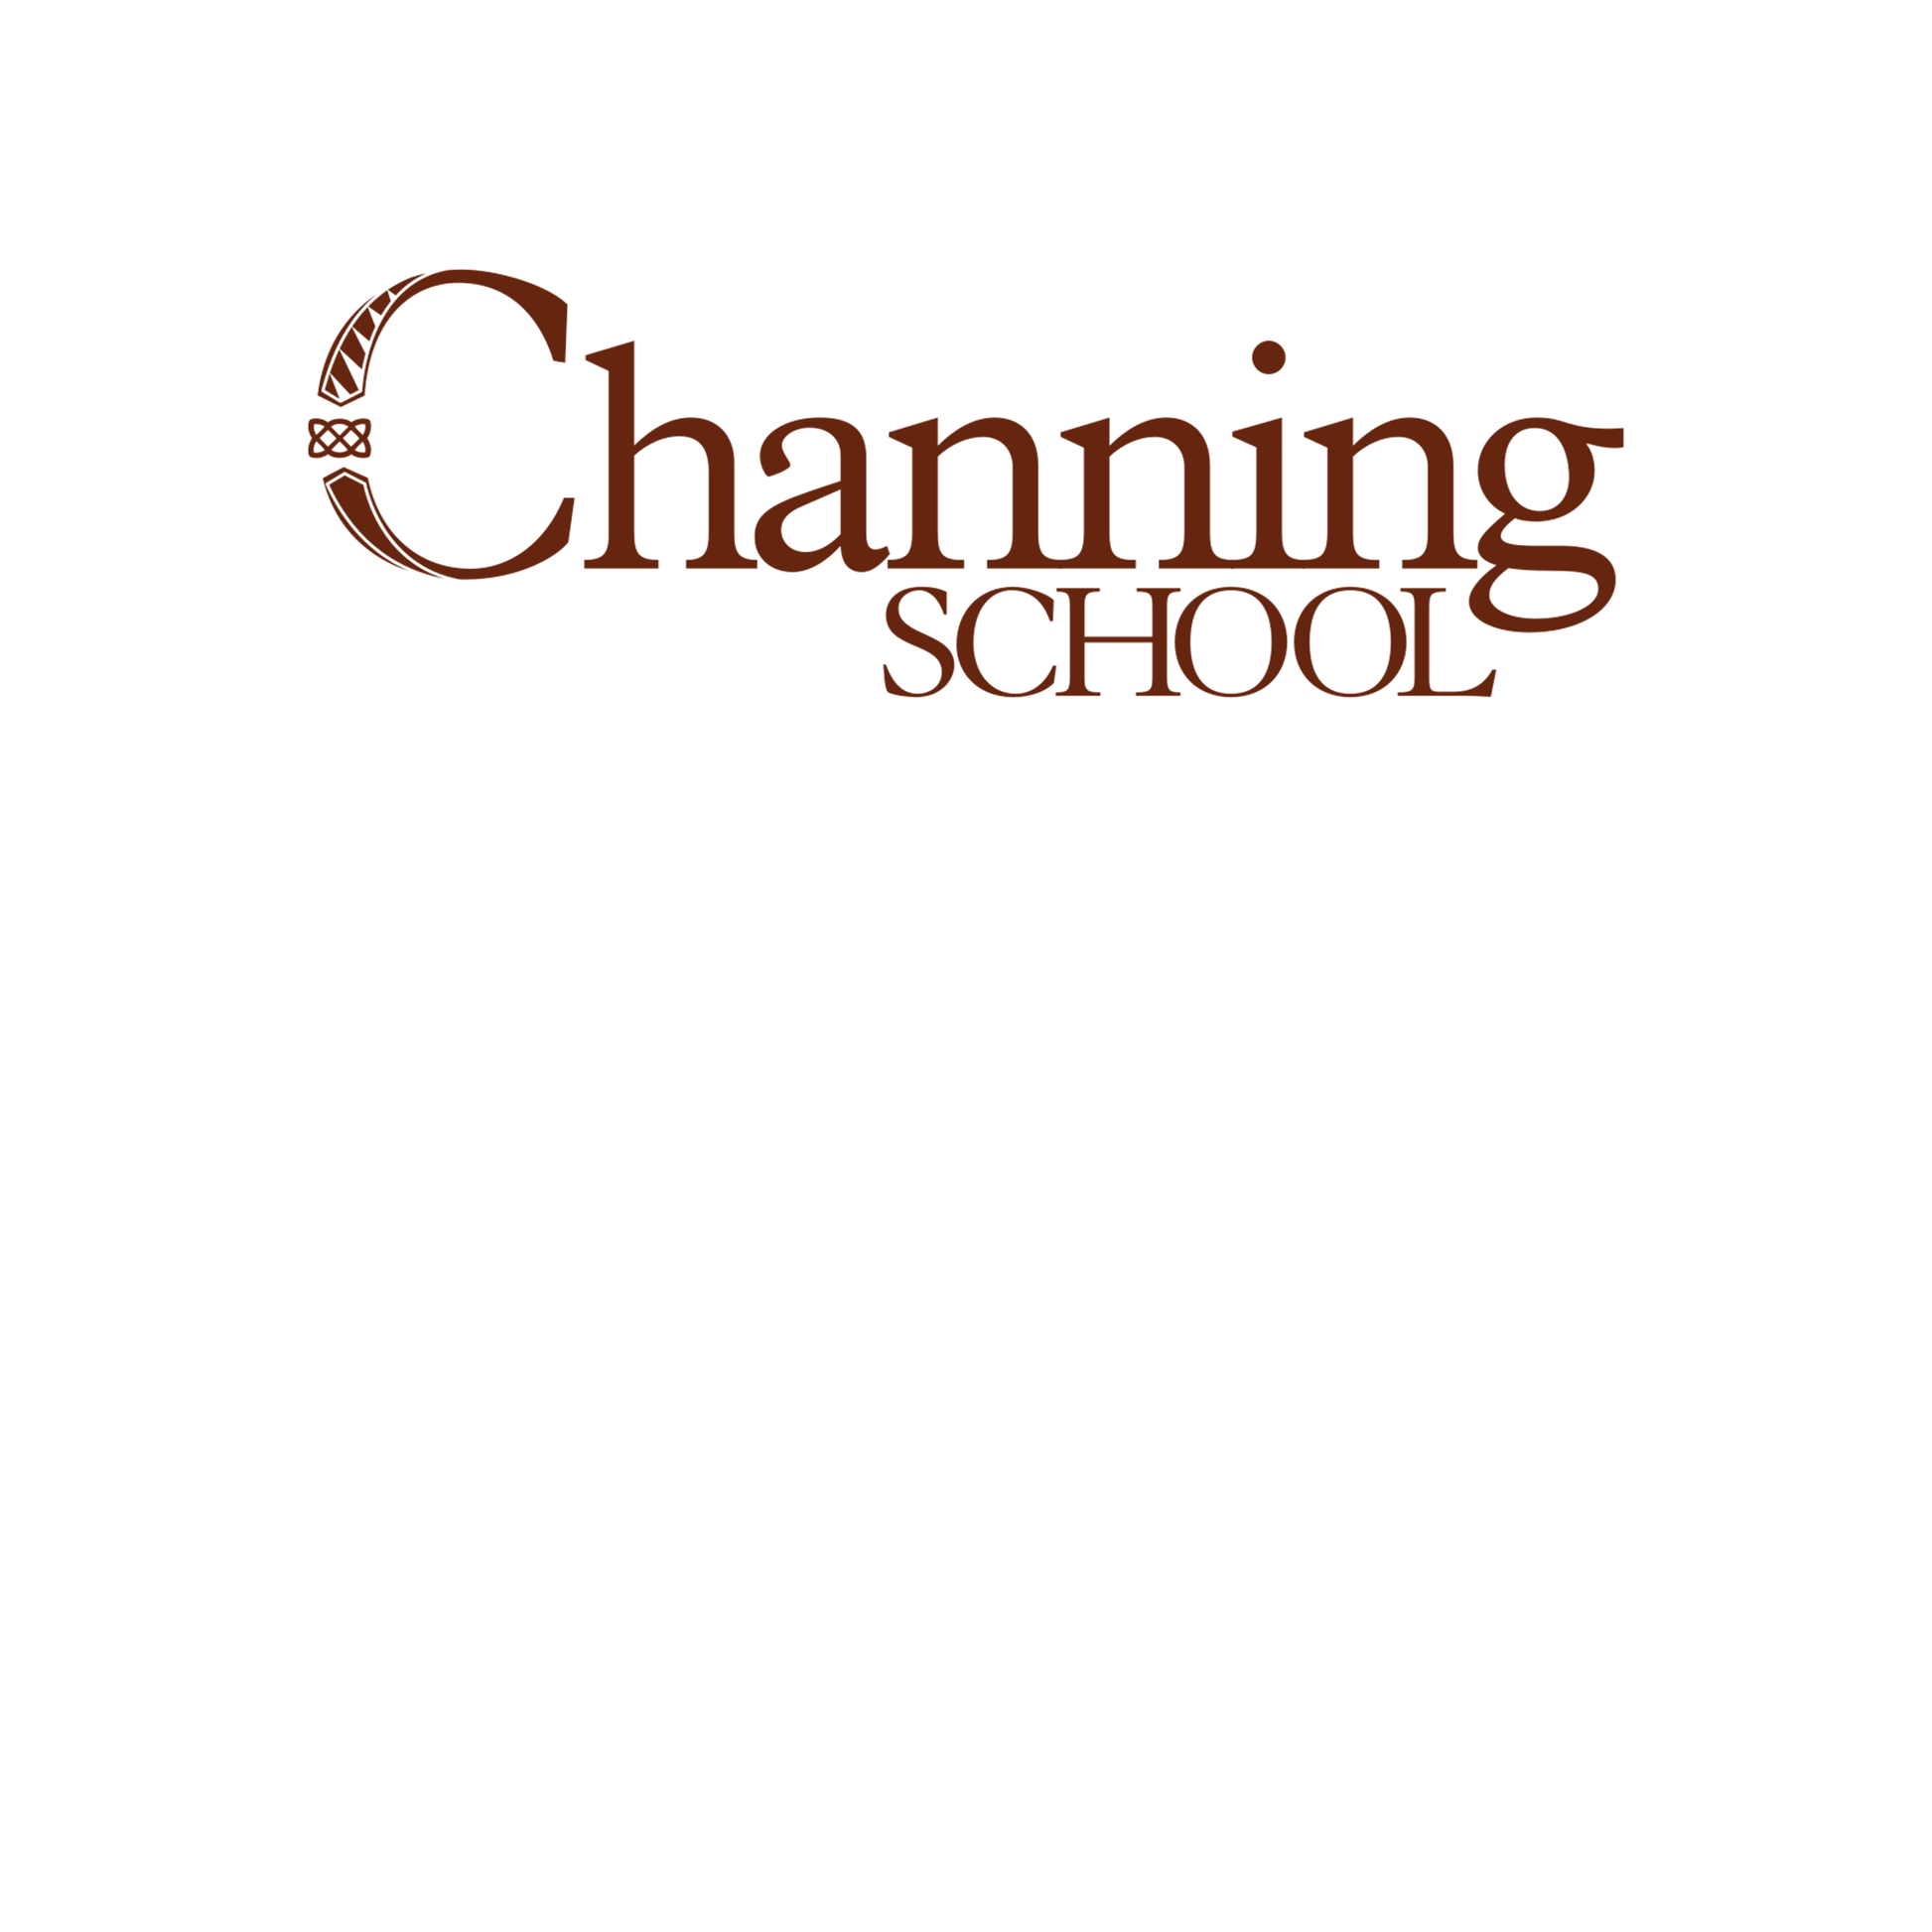 Channing School: 11+ English (2013) [Version: Group 2]